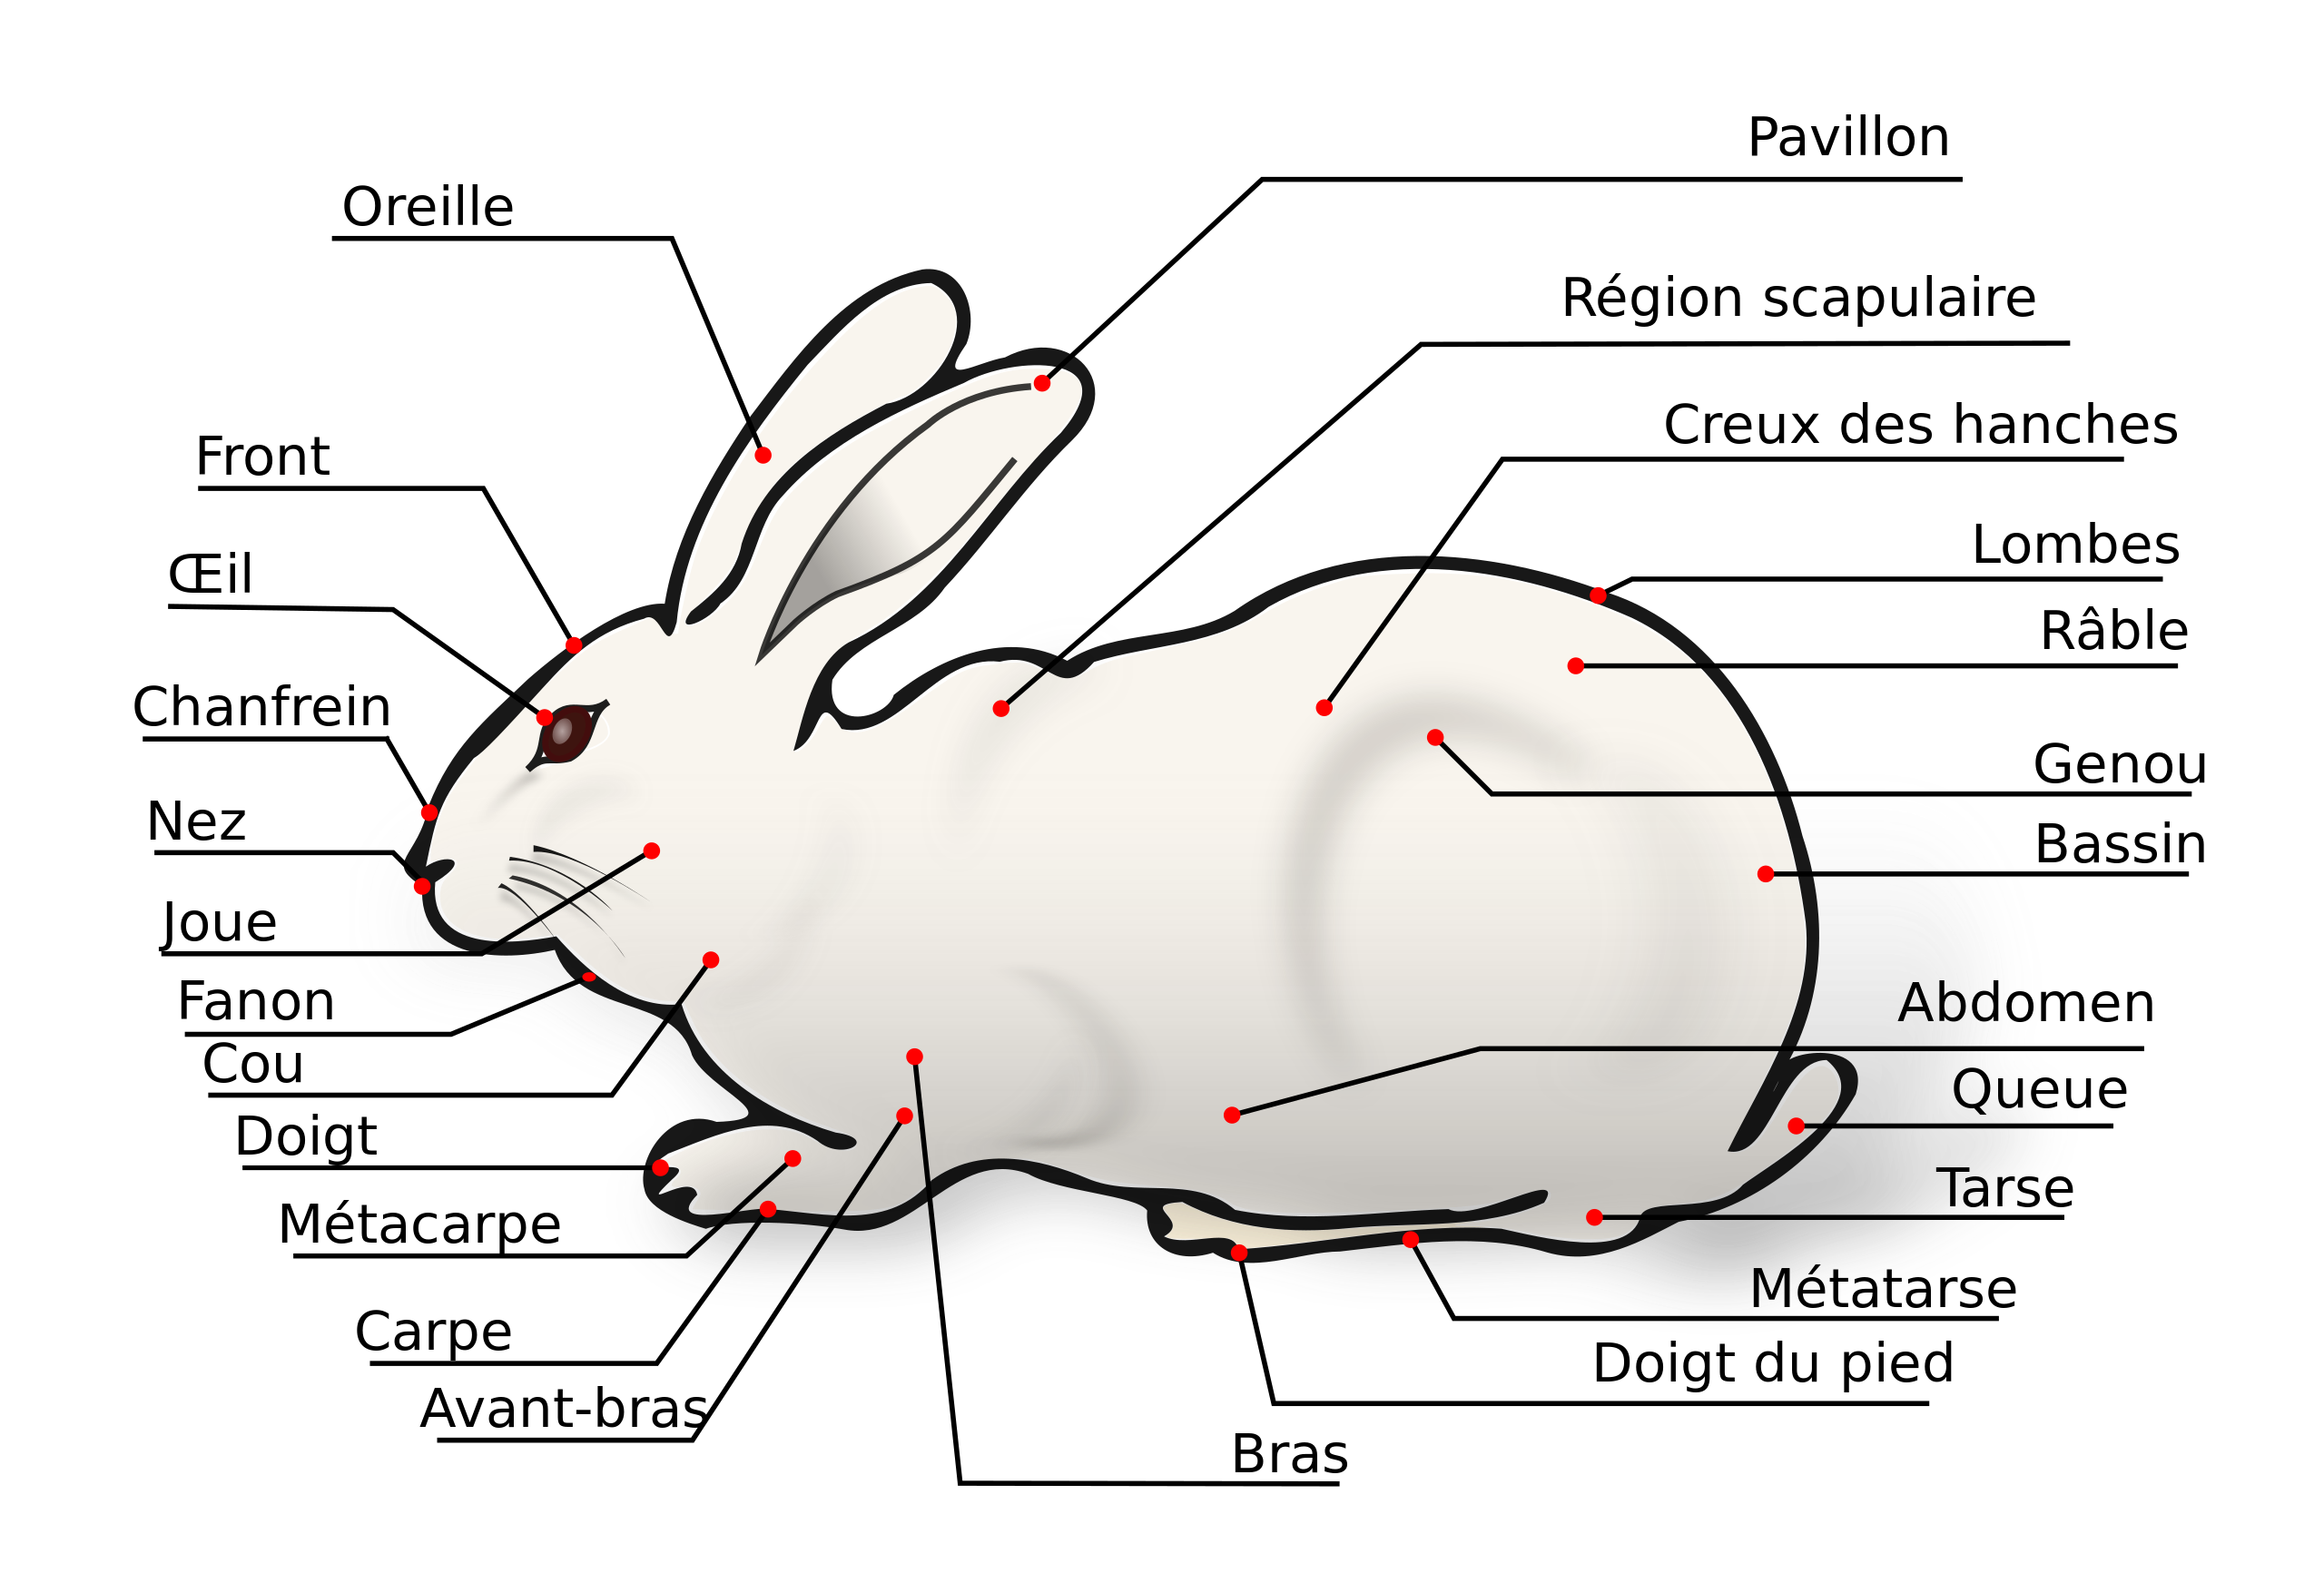 Rabbit - Wikipedia